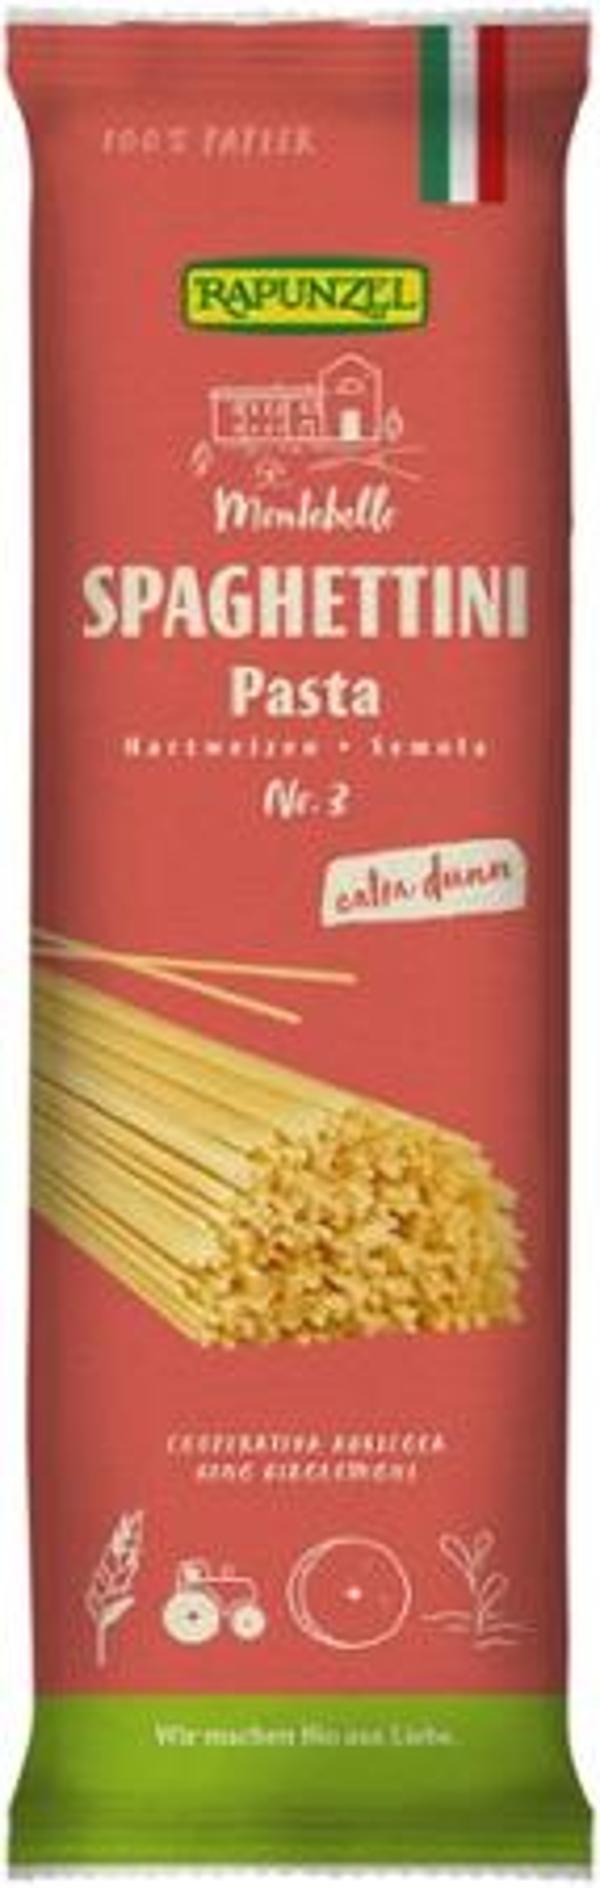 Produktfoto zu Spaghetti Semola extra dünn